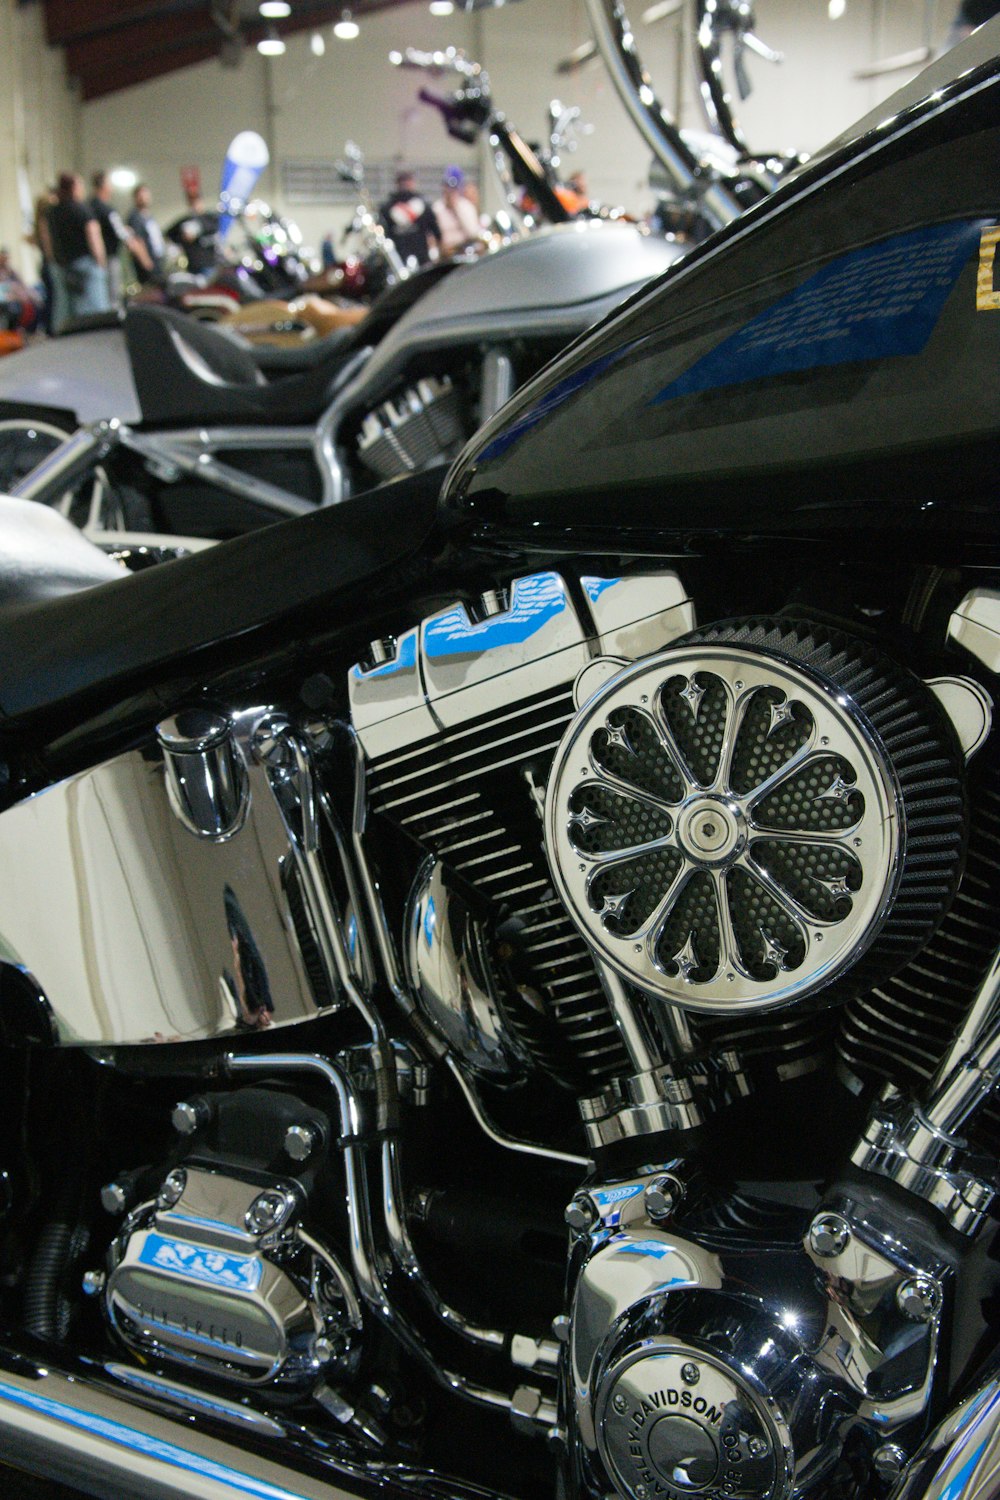 a shiny black motorcycle